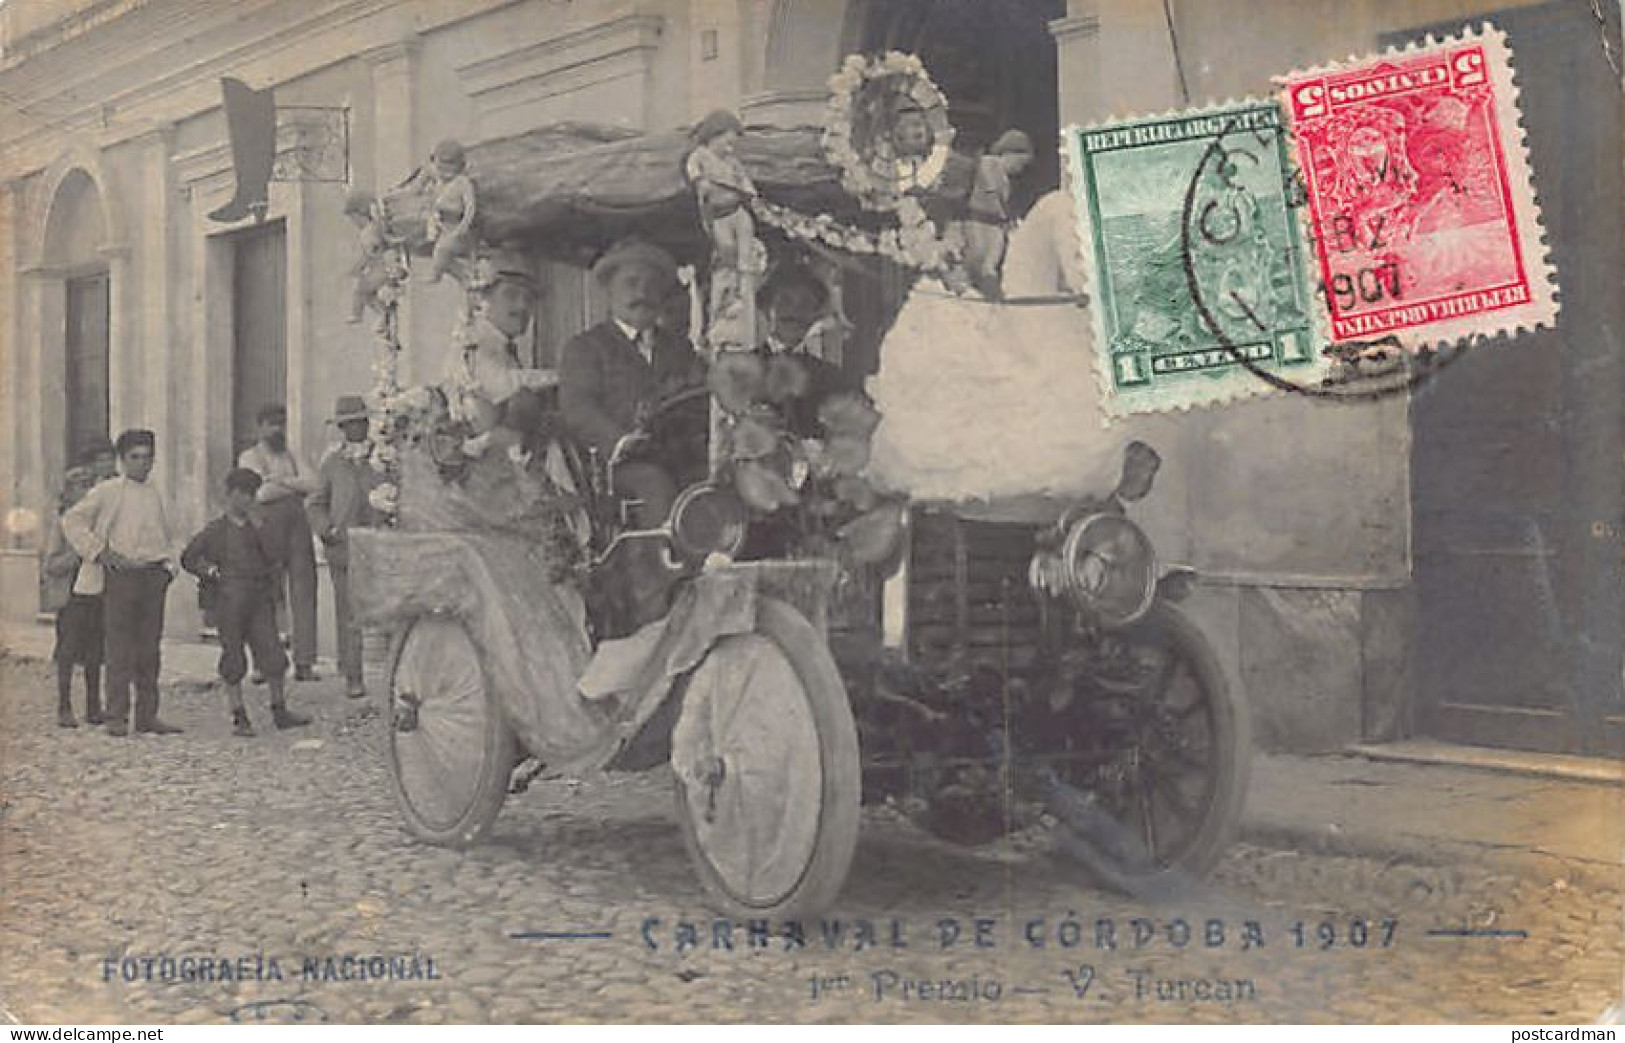 Argentina - CORDOBA - Carnaval 1907, Primer Premio - Fotografia Nacional - REAL PHOTO. - Argentinien